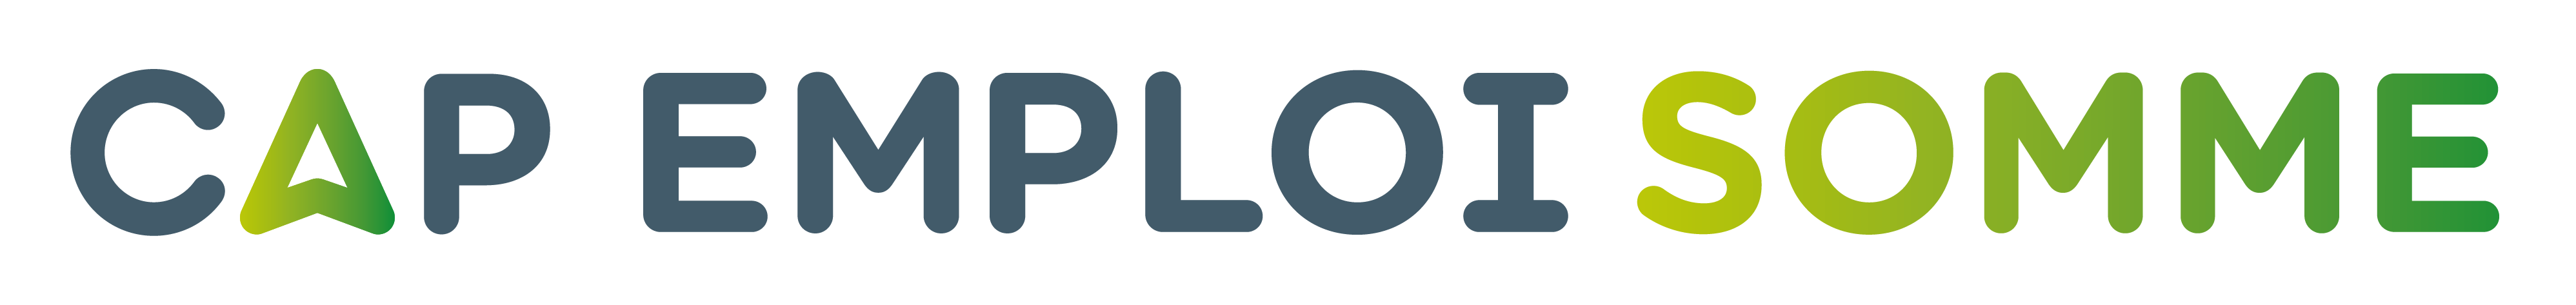 logo CapEmploi